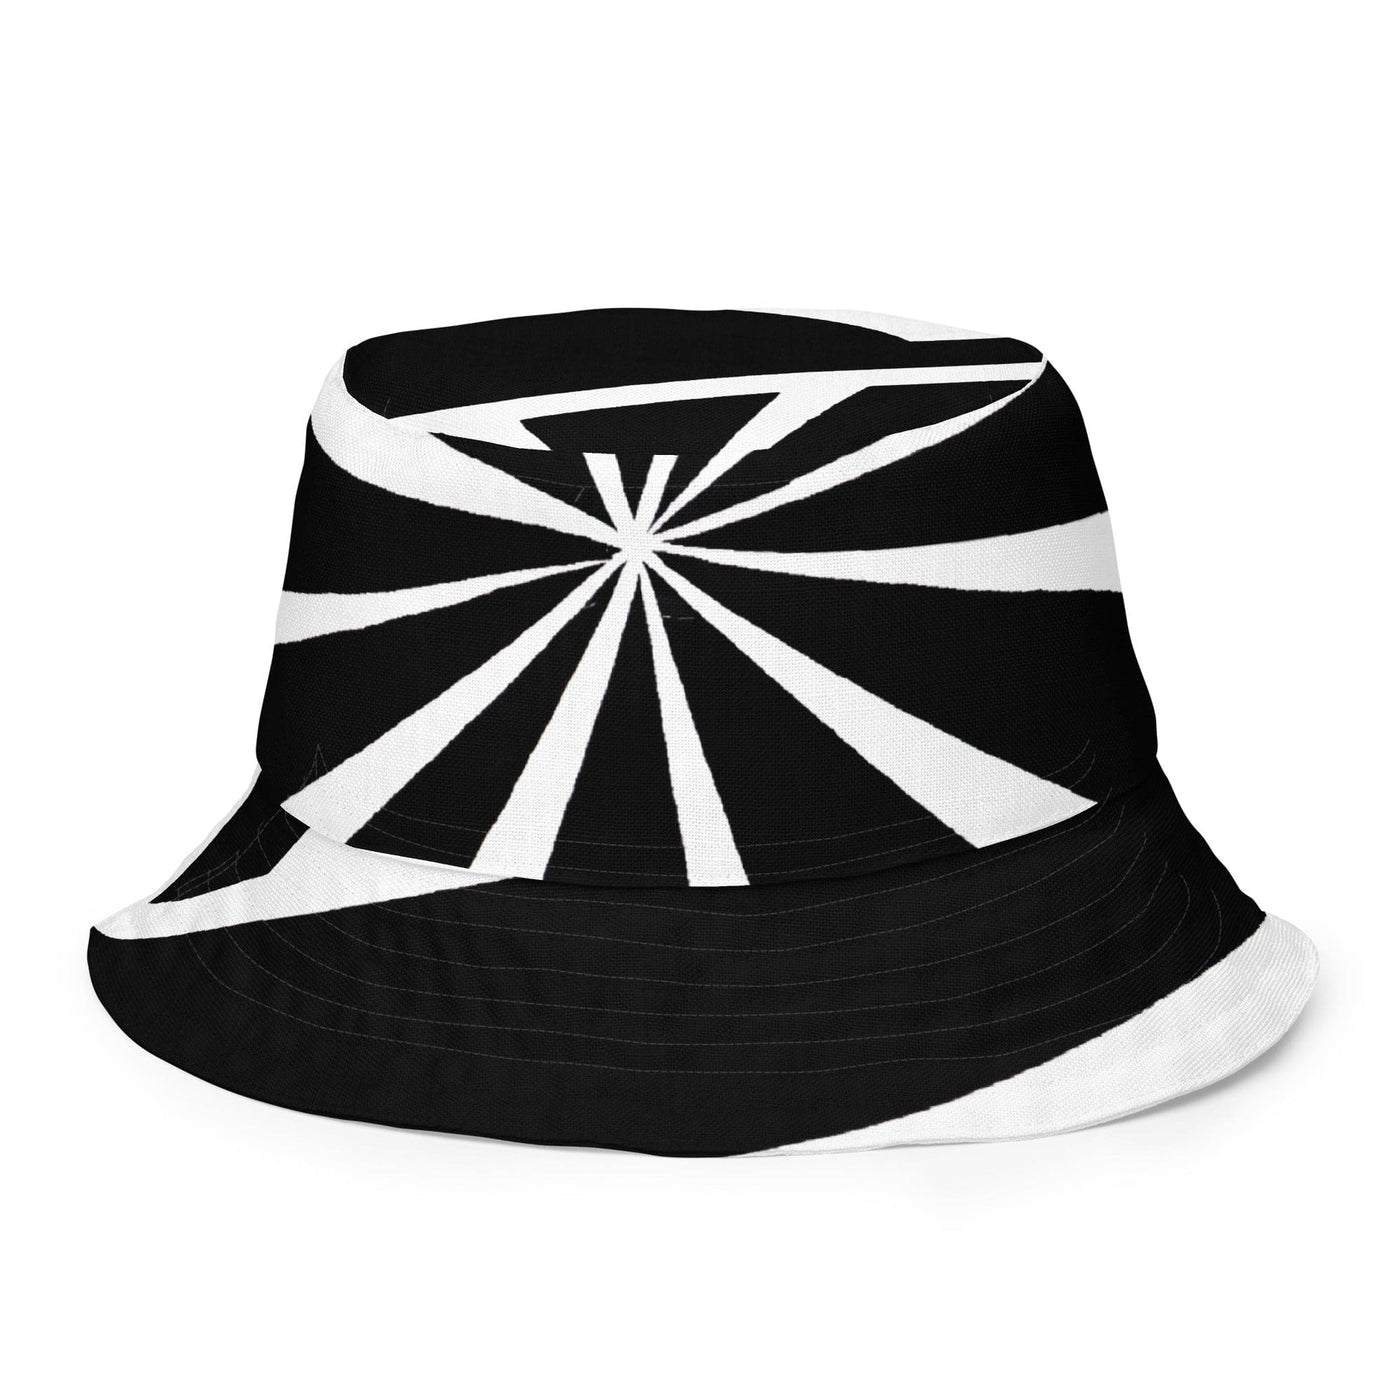 Reversible Bucket Hat Black And White Geometric Pattern 2 - Unisex / Bucket Hats